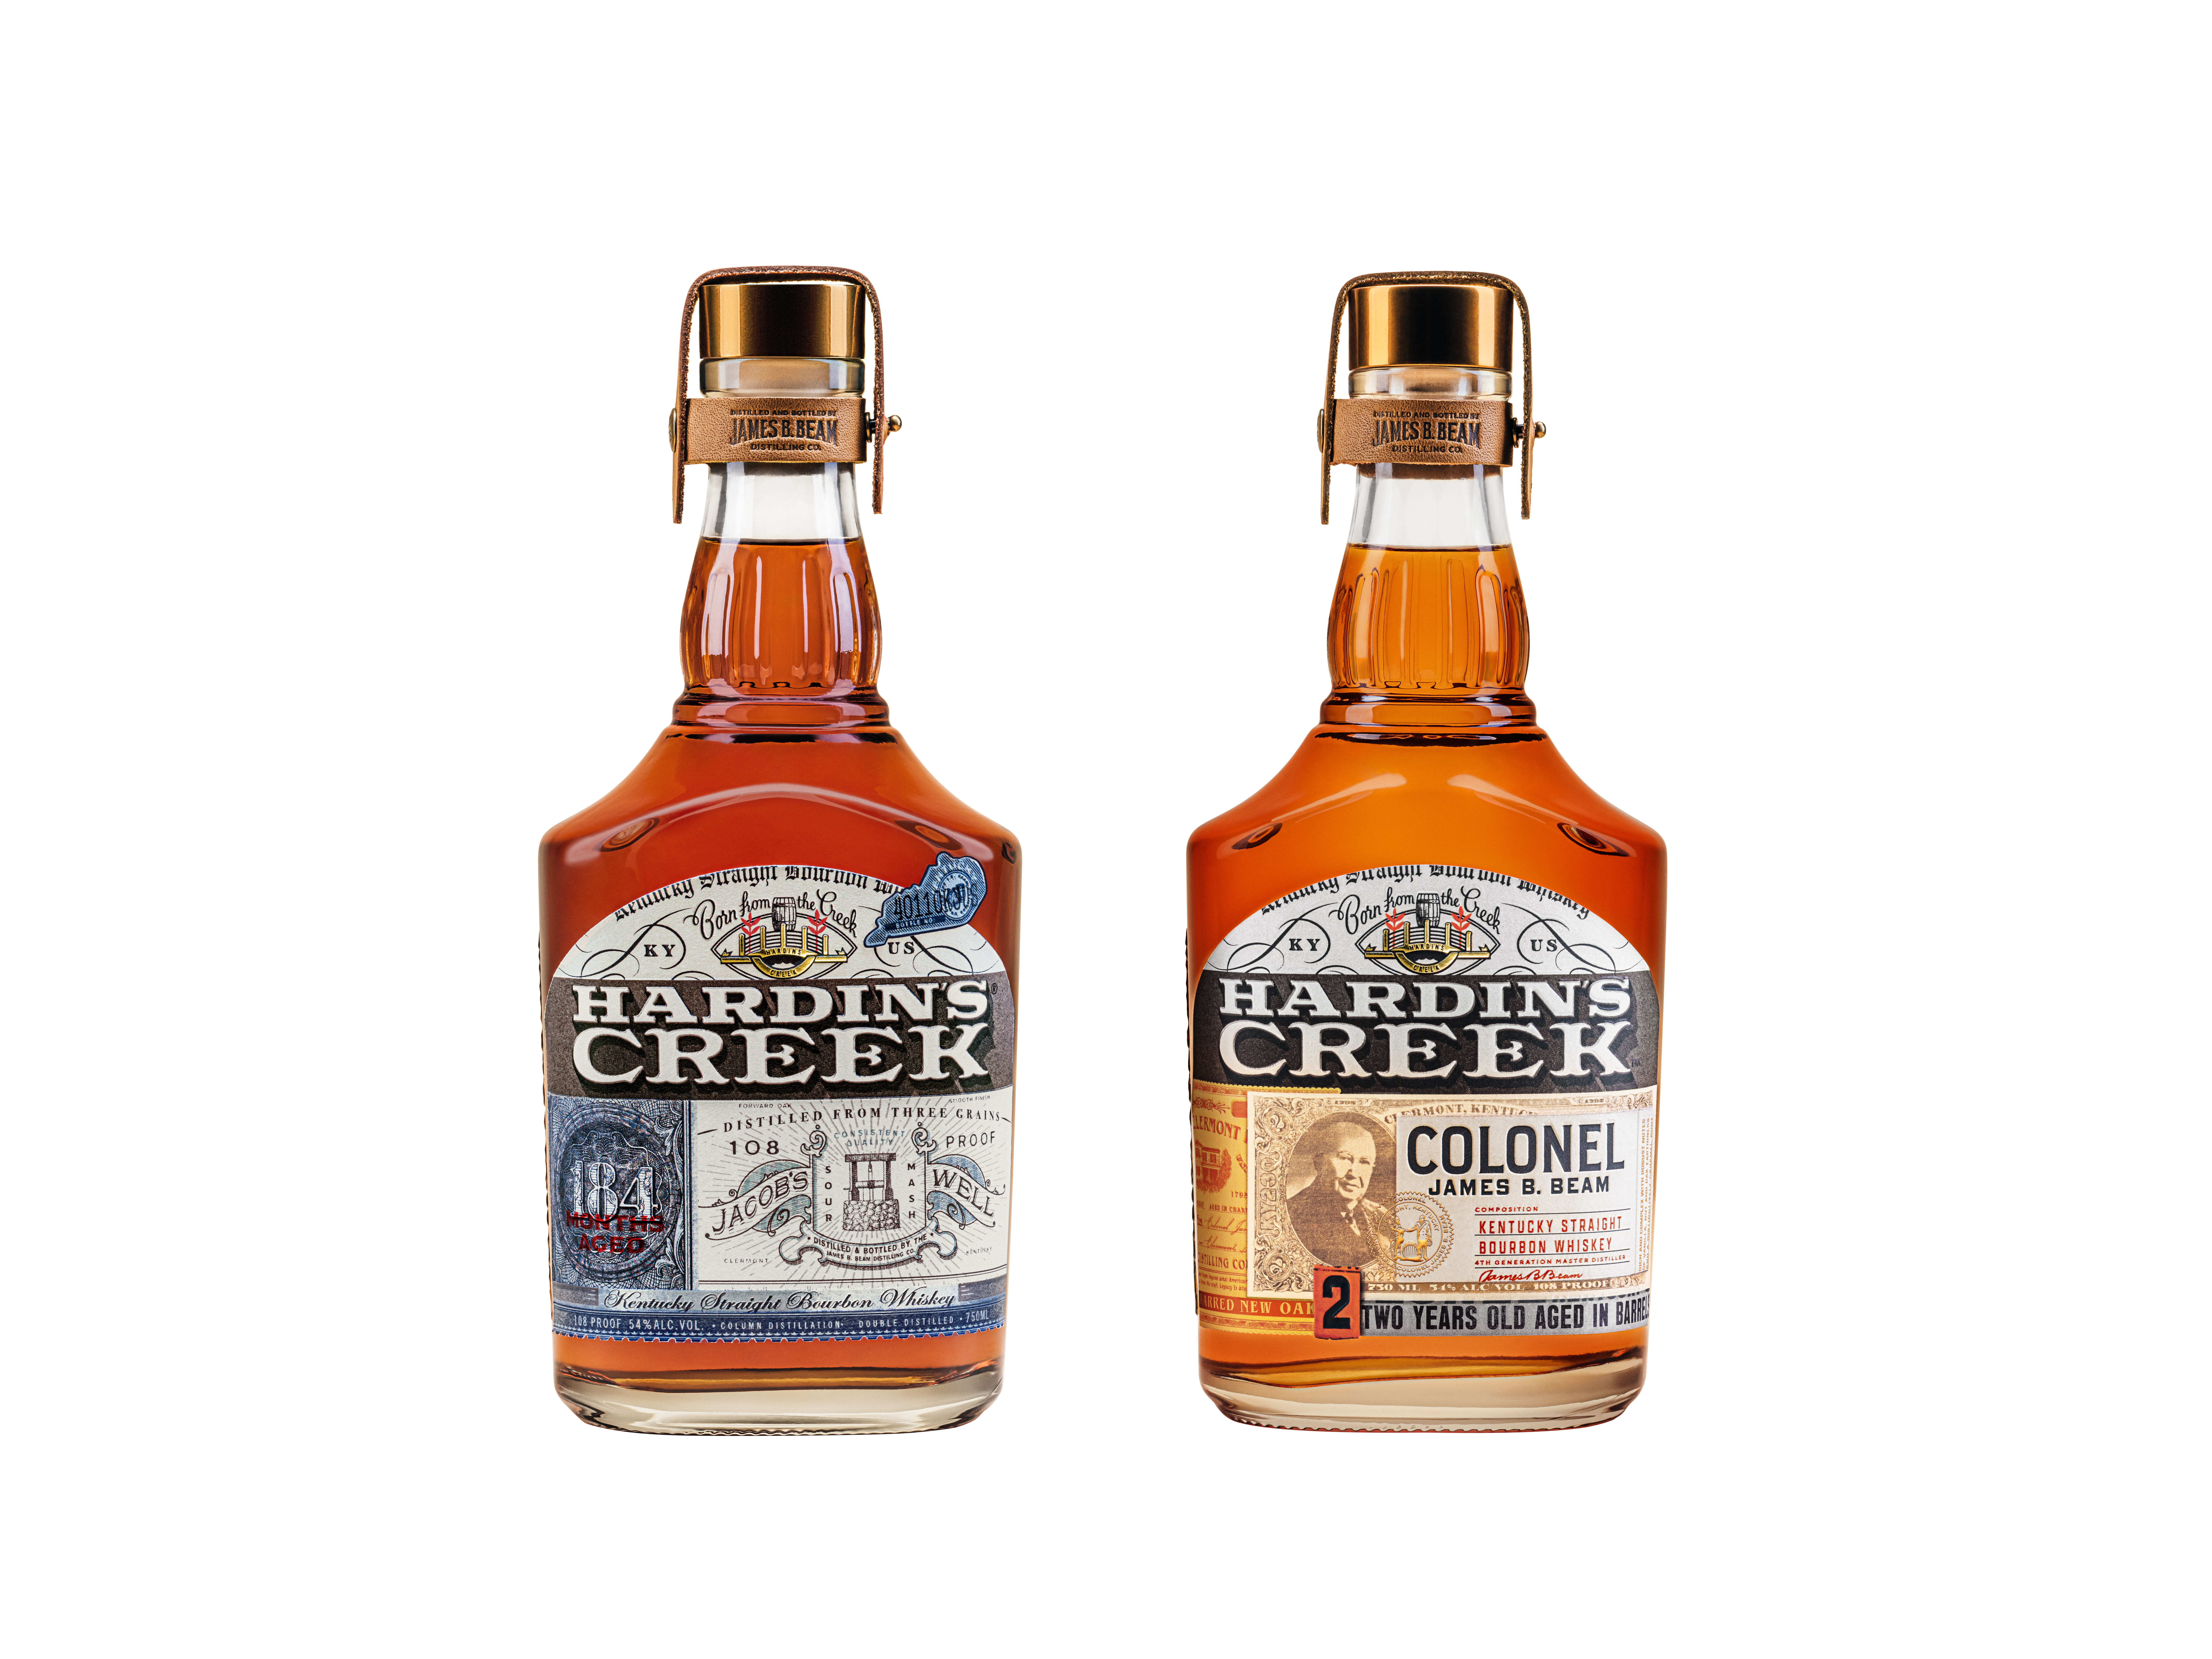 Jim Beam Hardin’s Creek whiskey hardins colonel